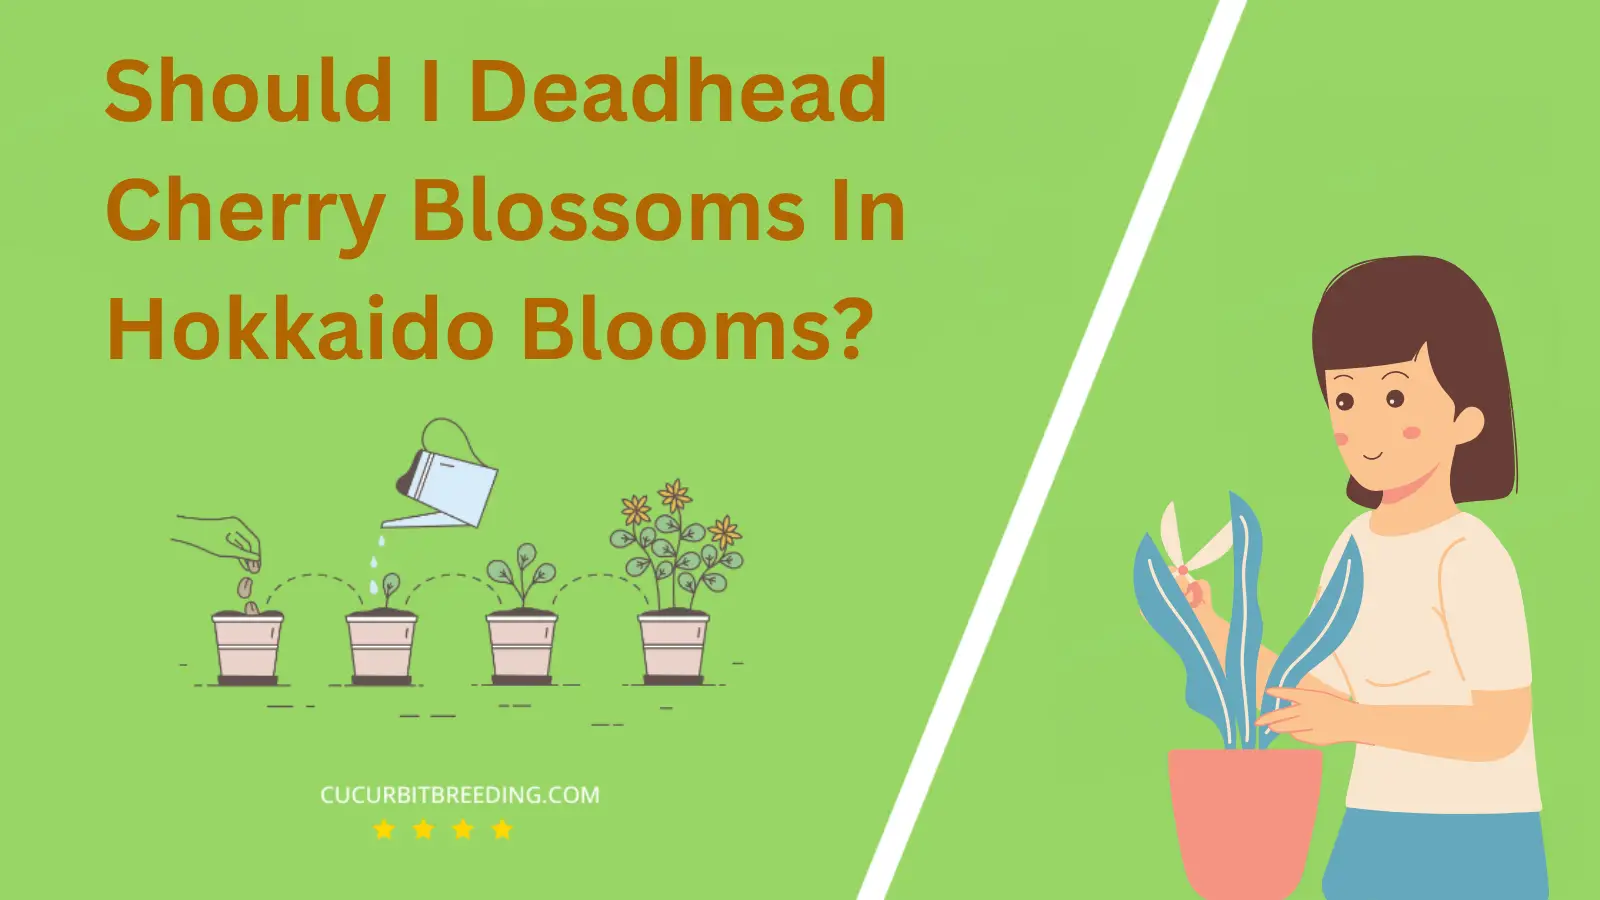 Should I Deadhead Cherry Blossoms In Hokkaido Blooms?